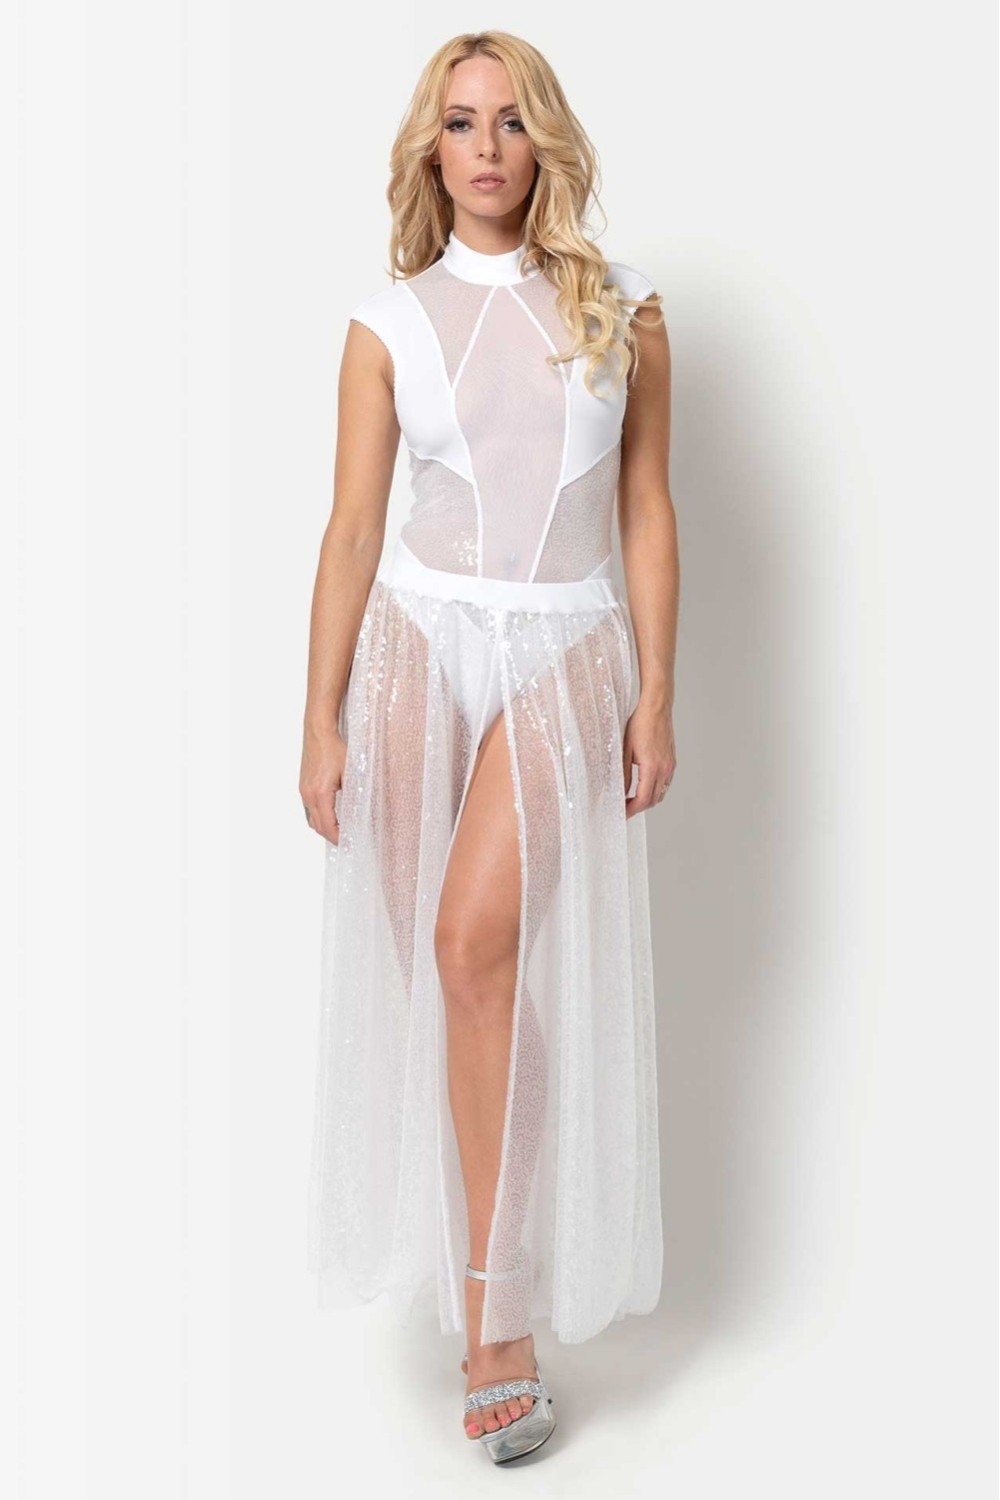 Opera, white long sequin skirt - Patrice Catanzaro Official Website